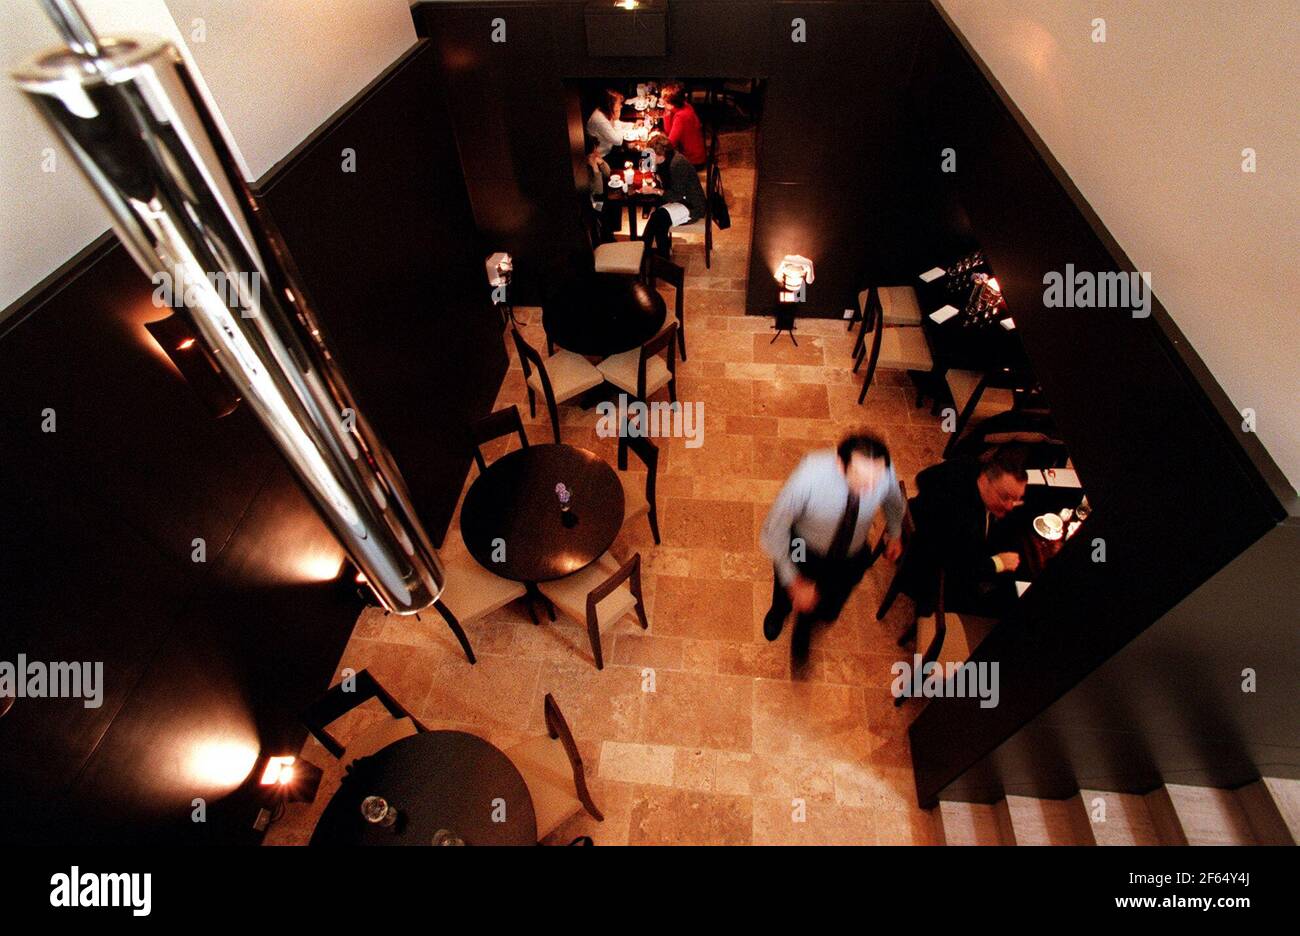 The Black Truffle Restaurant in North London January 2000 Stock Photo